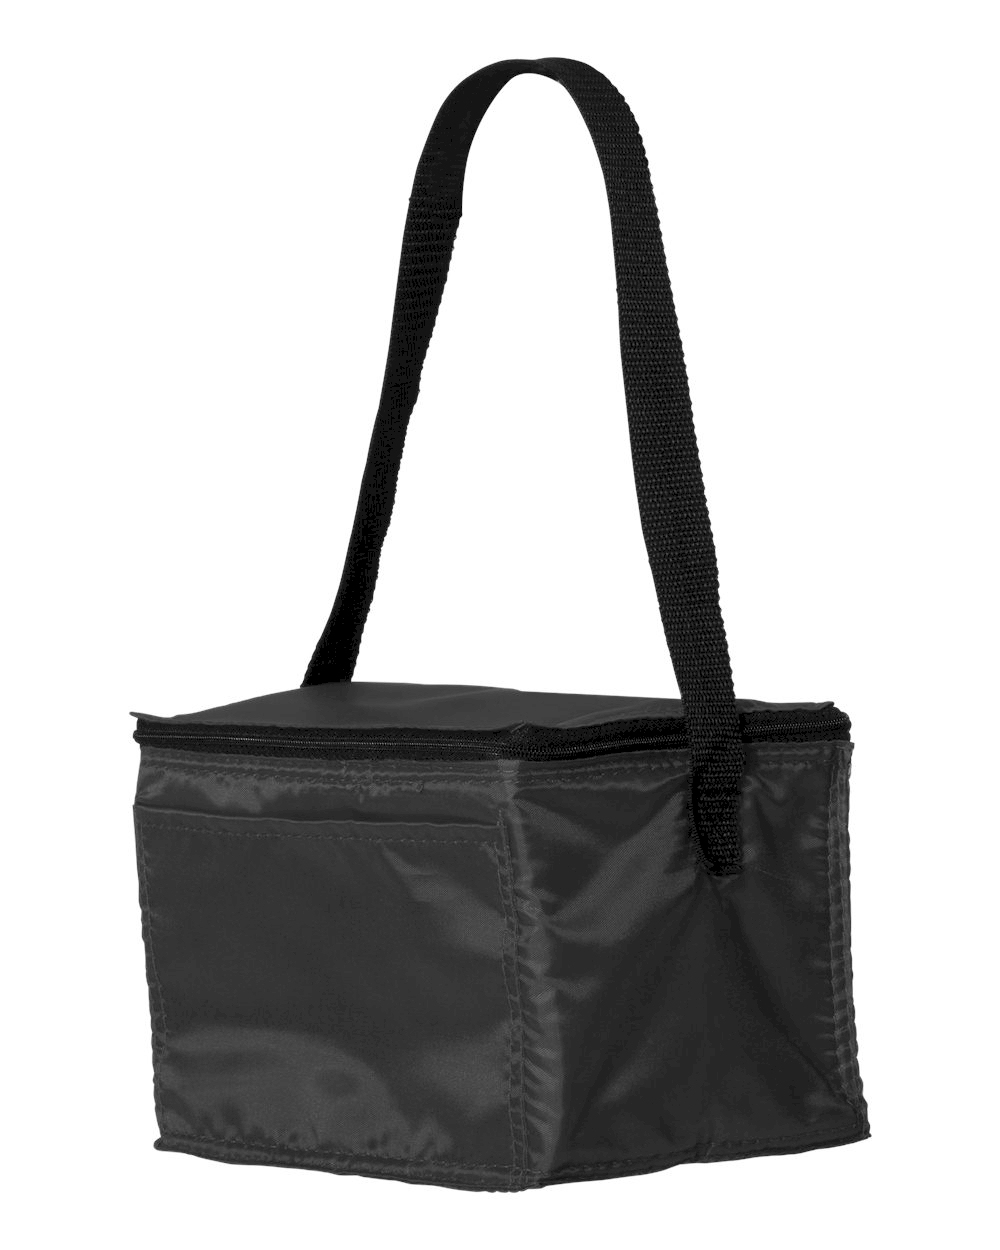 Joe Six Pack Cooler Bag Embroidery Blanks - BLACK